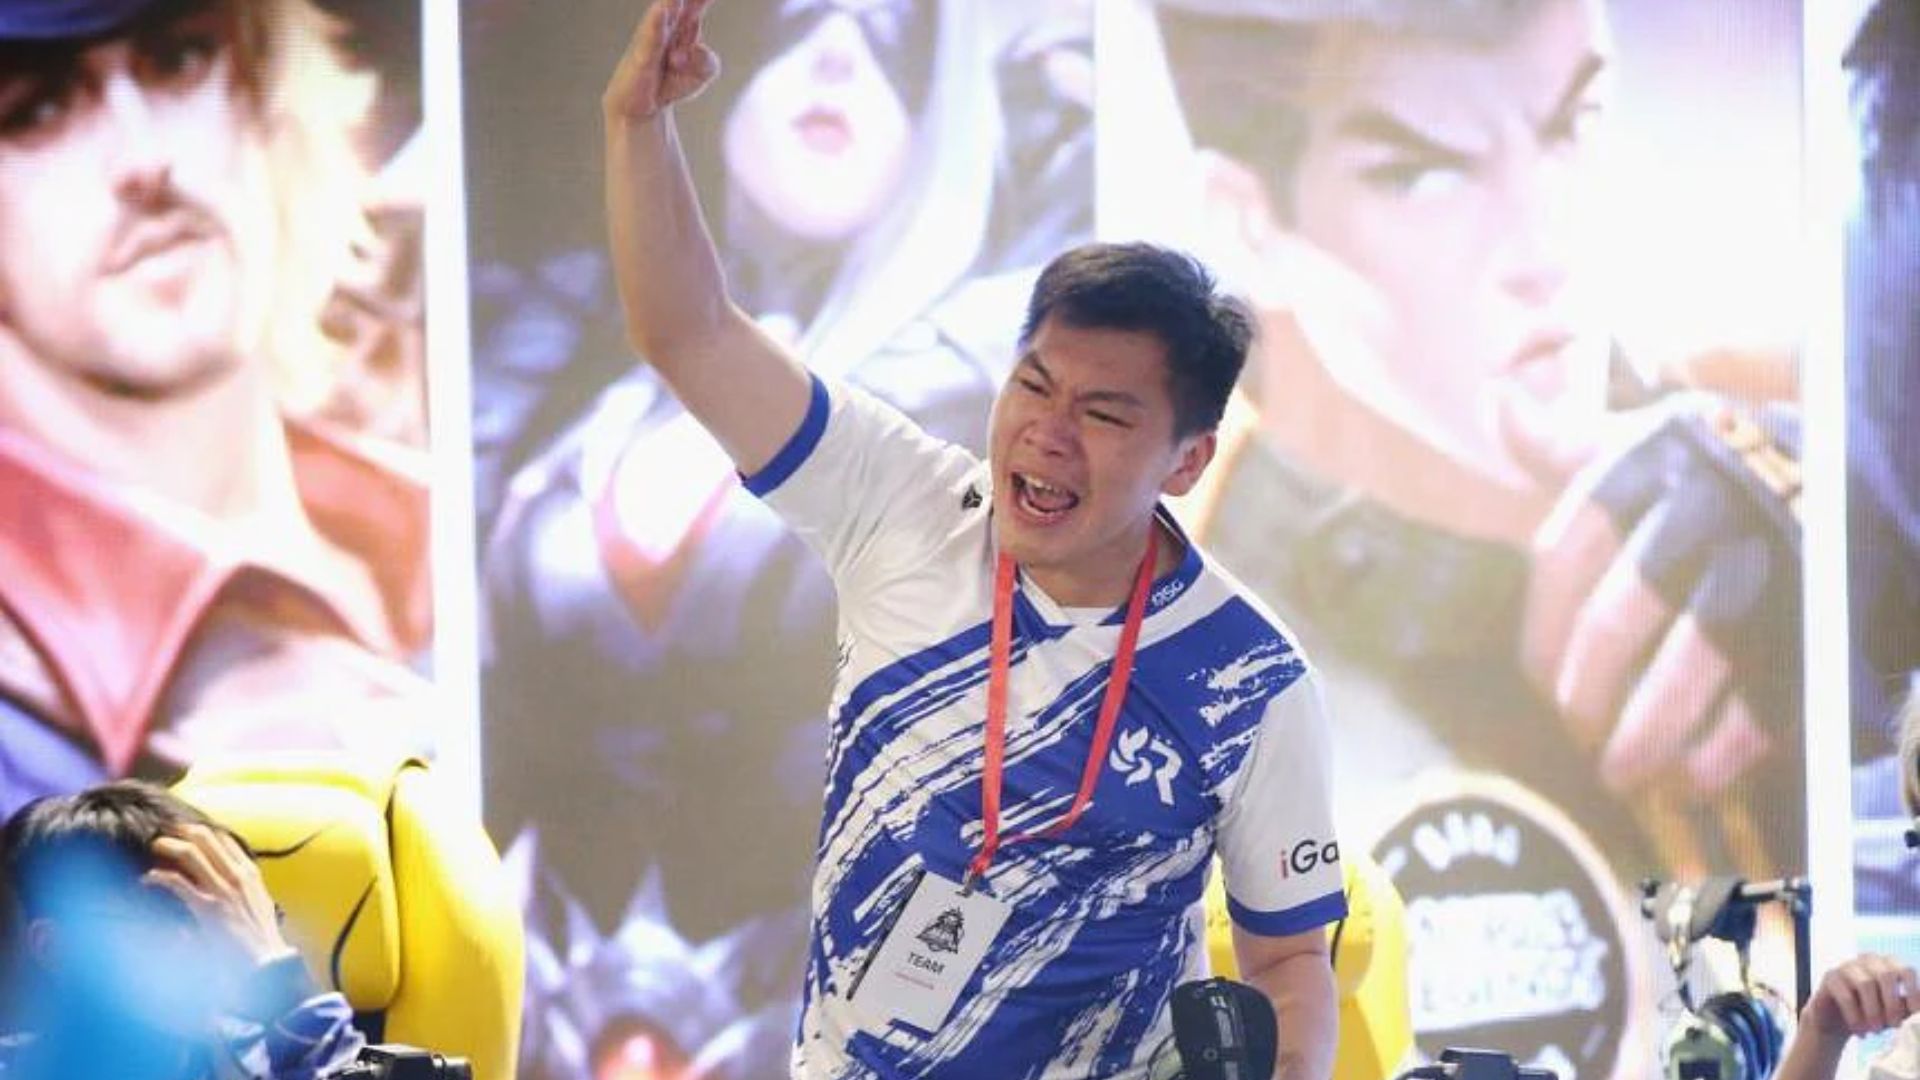 RSG SG beats Slate Esports to win MPL SG S4, represents S’pore at World Finals